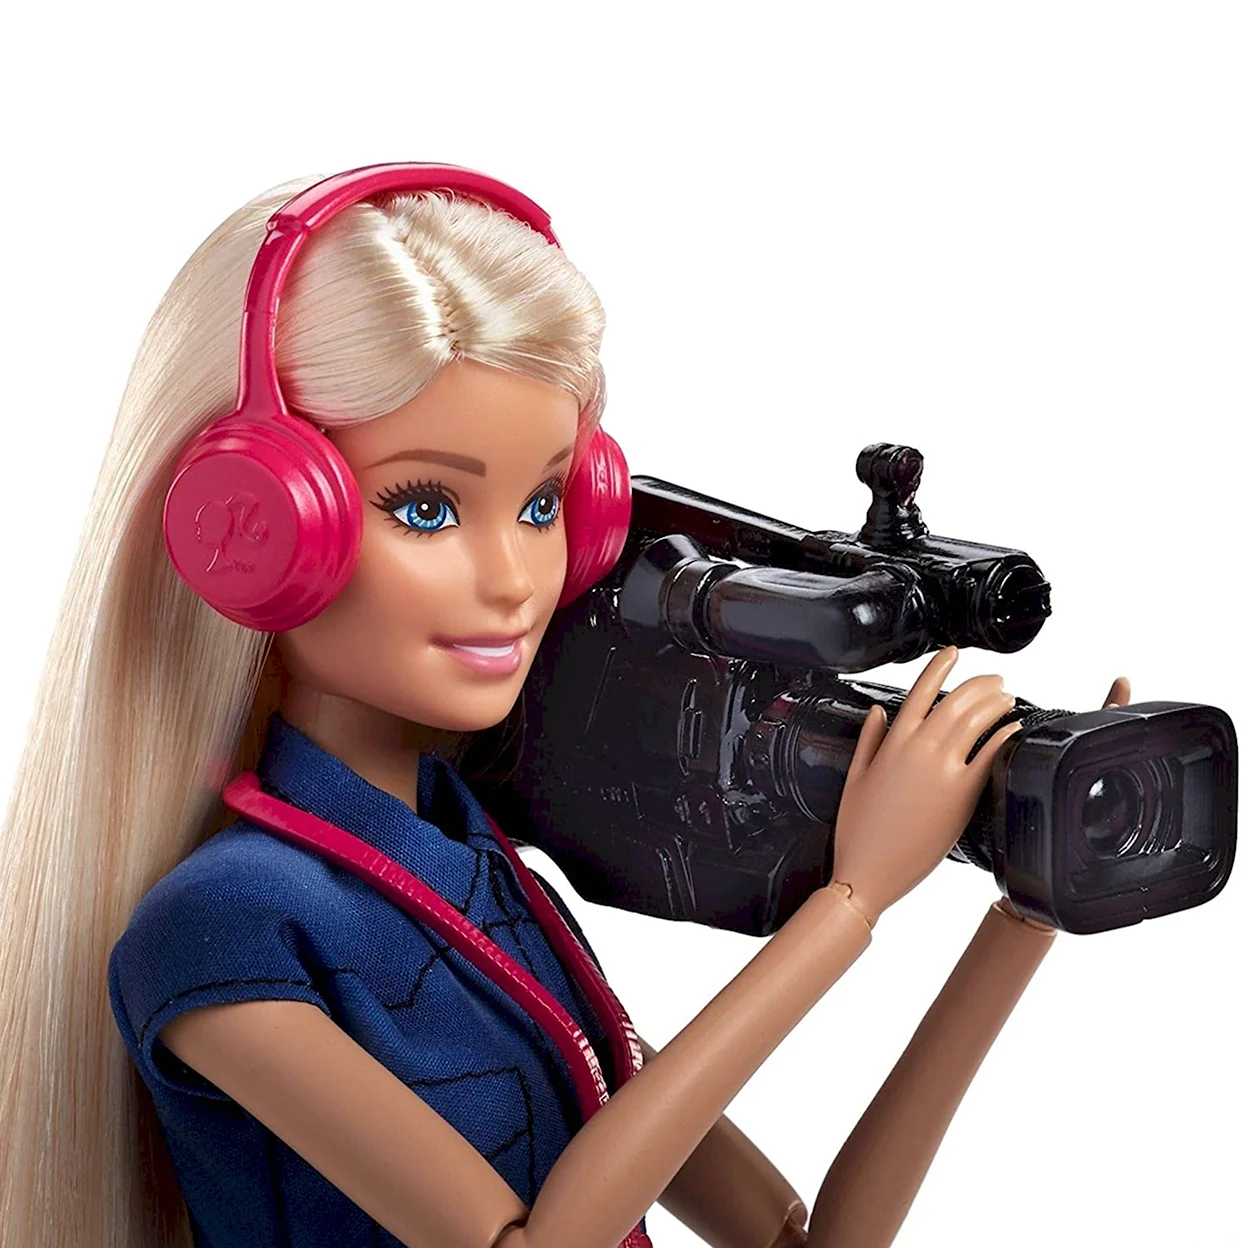 Набор кукол Barbie команда теленовостей fjb22. Игрушка